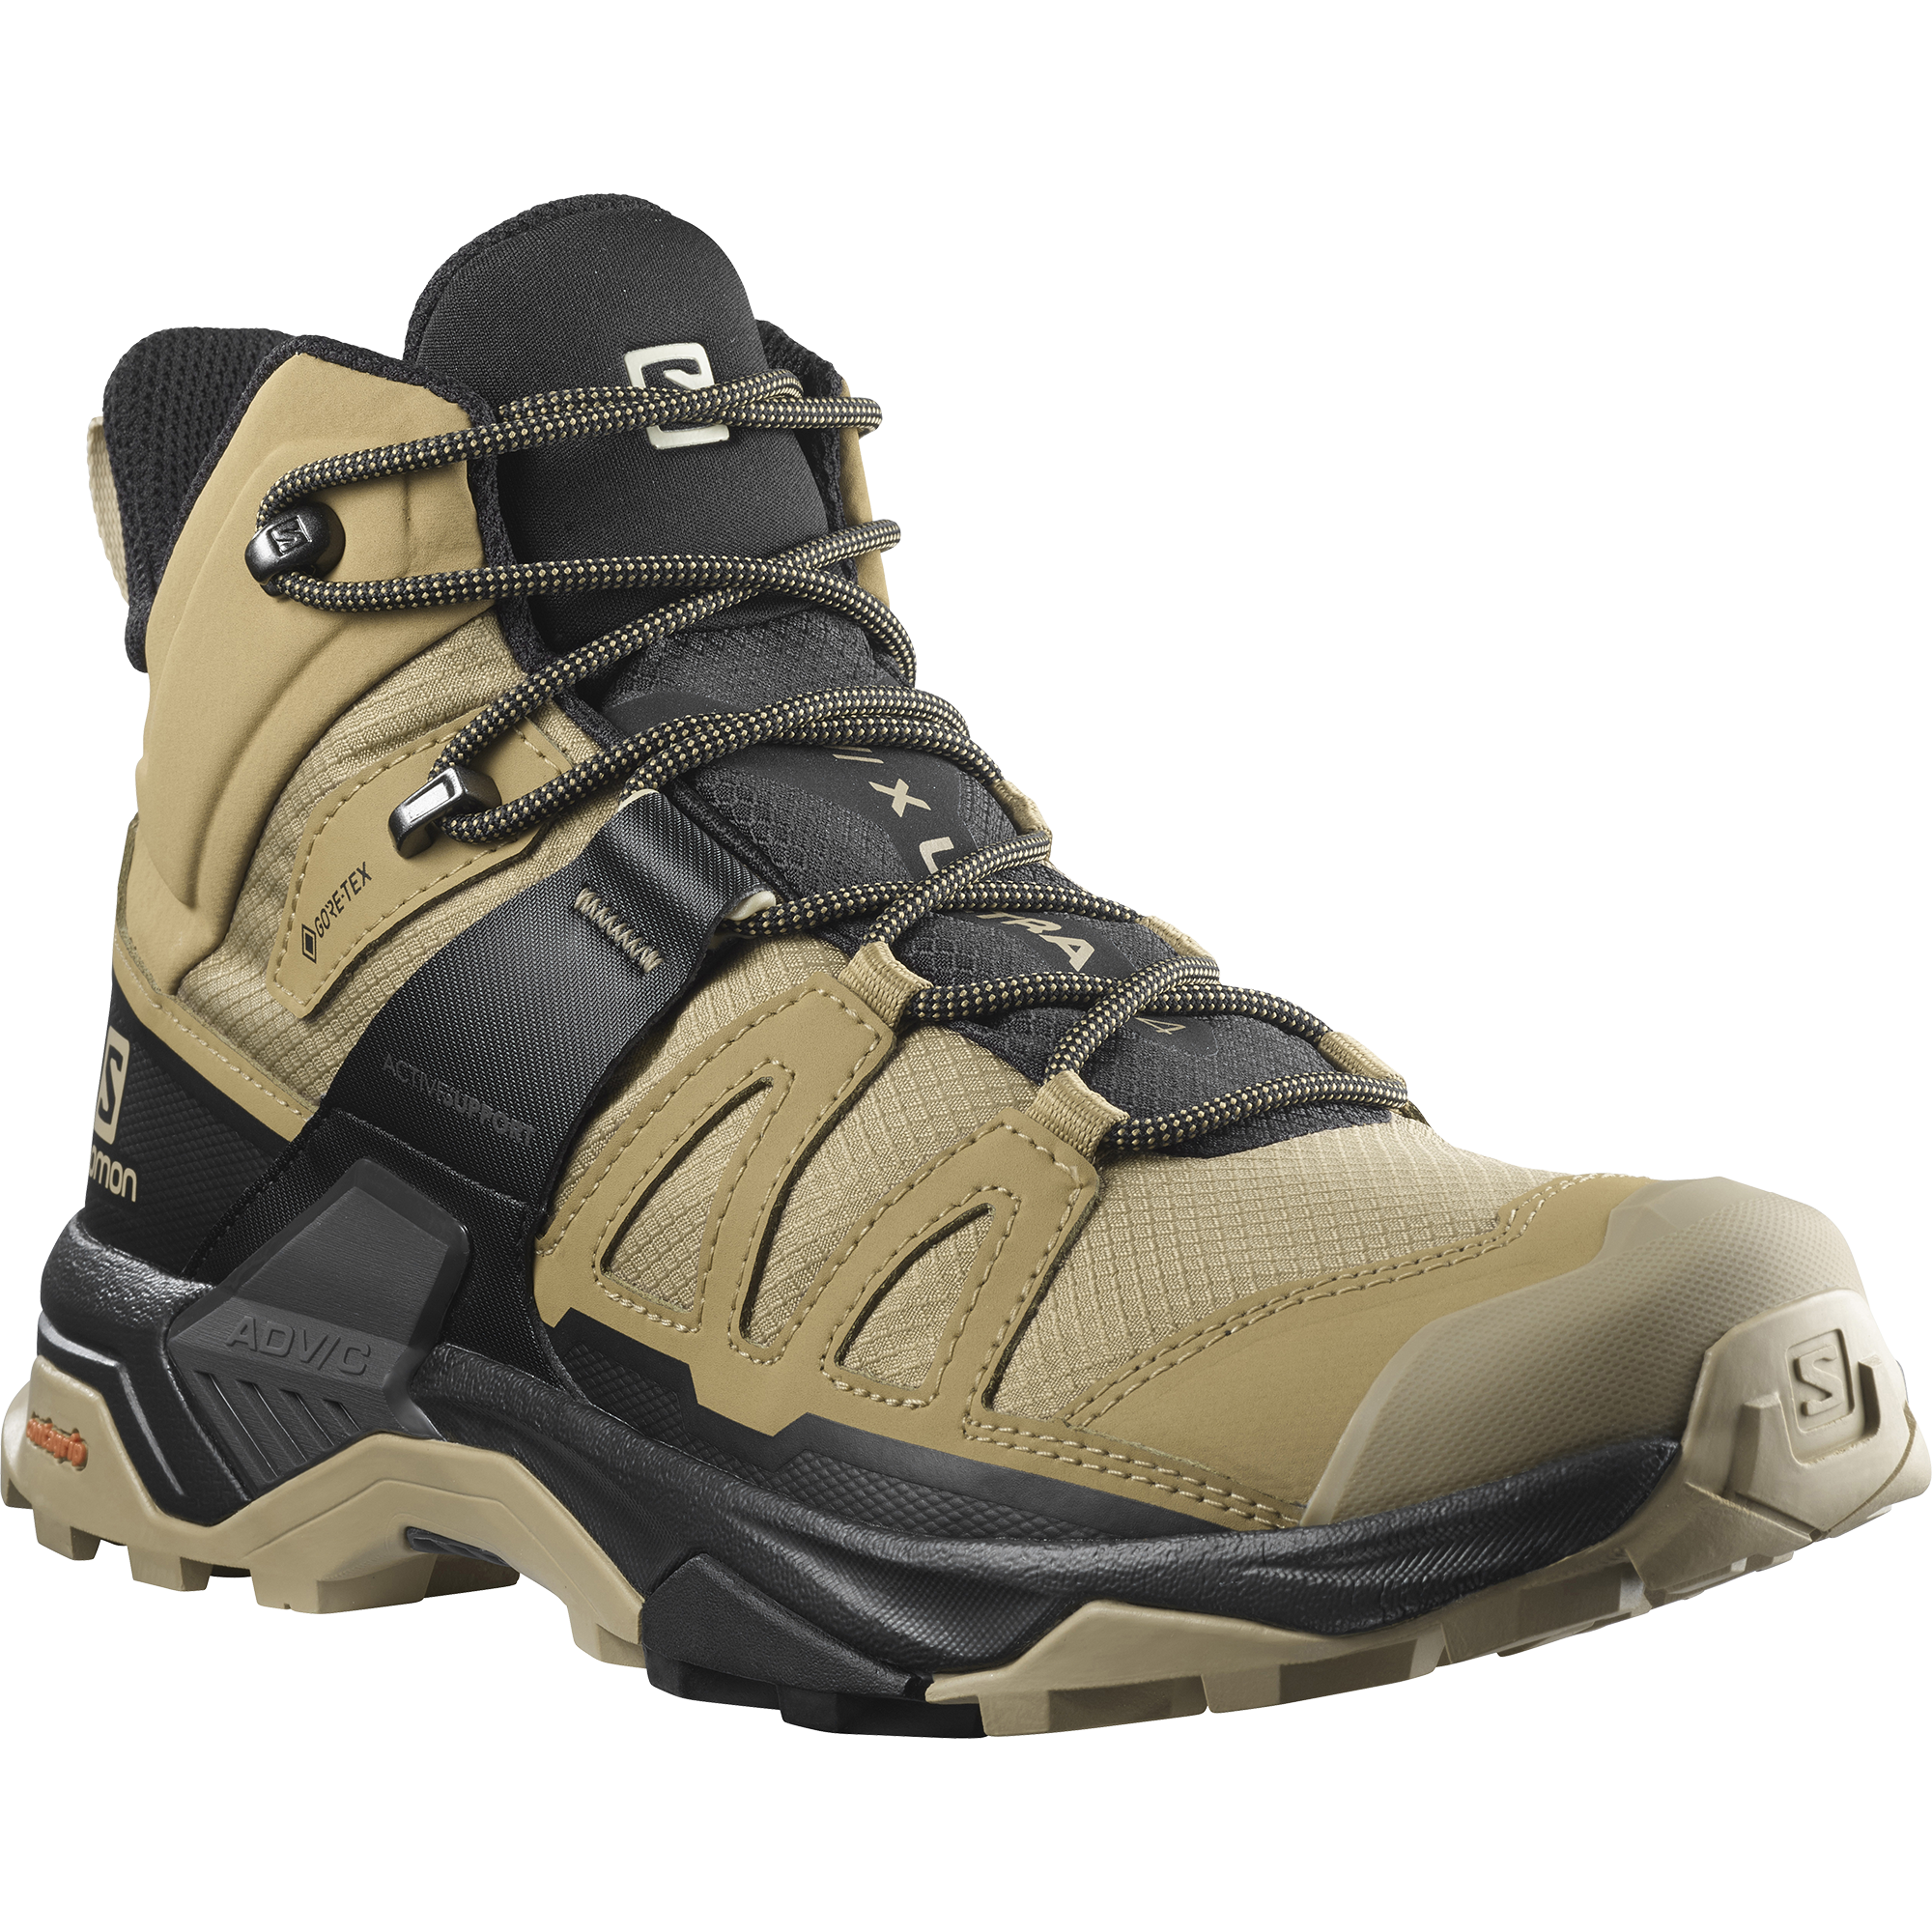 Salomon X Ultra 4 Mid GORE-TEX Hiking Boots for Men - Kelp/Black/Safari - 8.5M